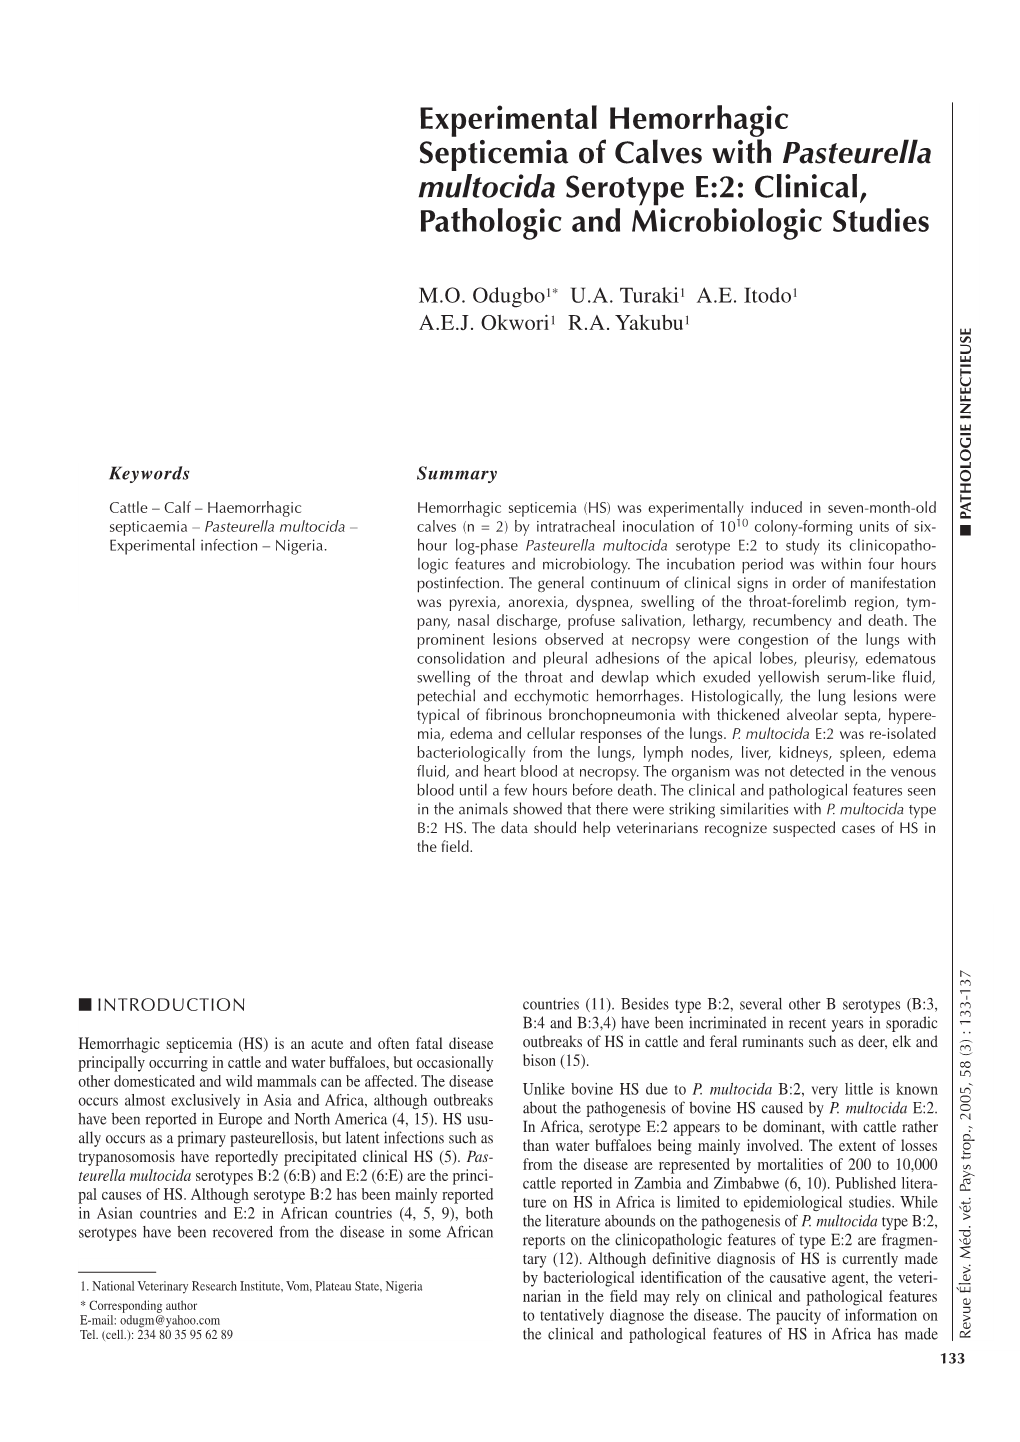 Experimental Hemorrhagic Septicemia of Calves with Pasteurella Multocida Serotype E:2: Clinical, Pathologic and Microbiologic Studies